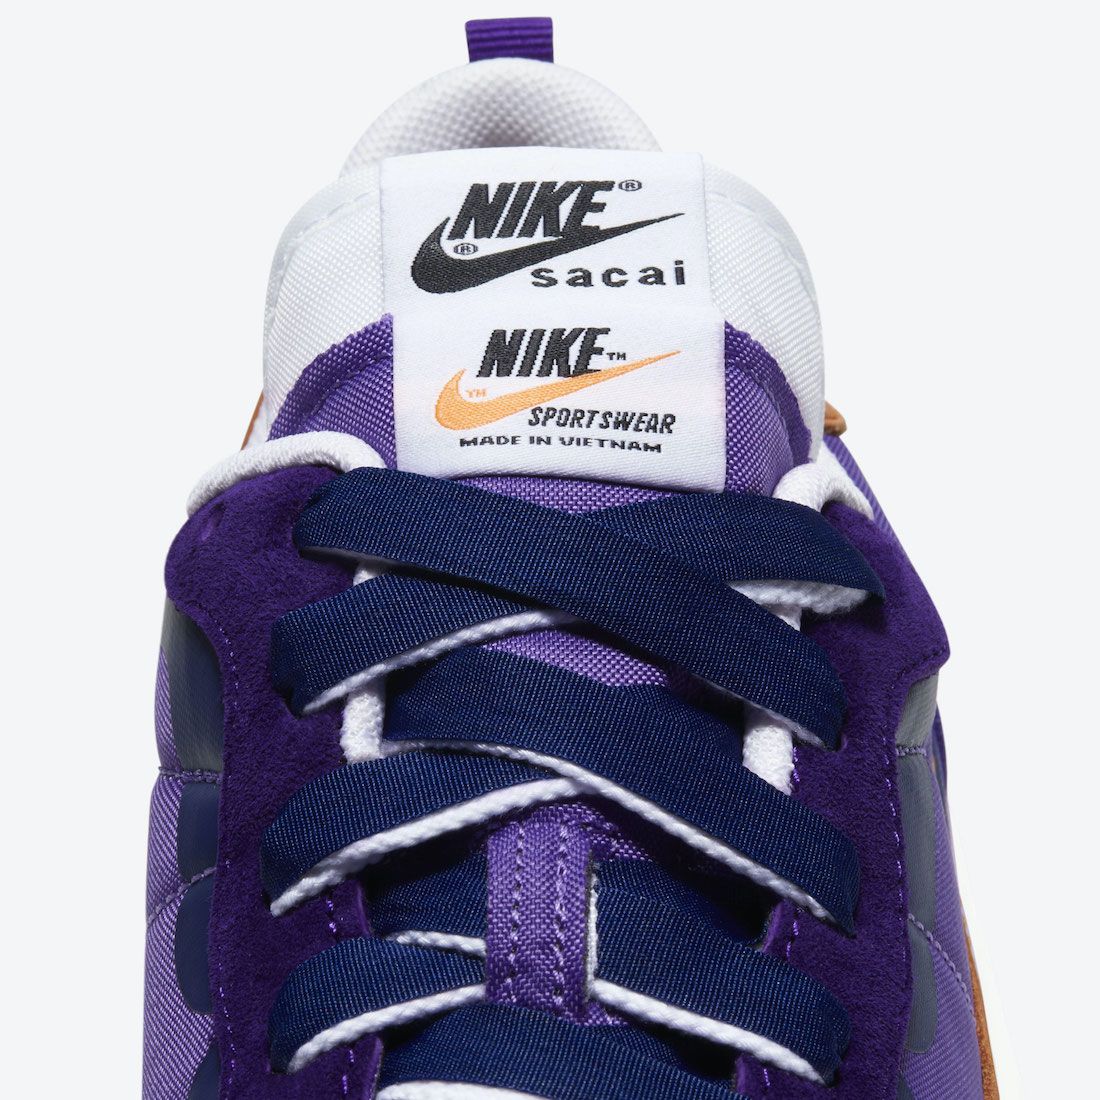 Official Pics: The sacai x Nike VaporWaffle 'Dark Iris' - Sneaker